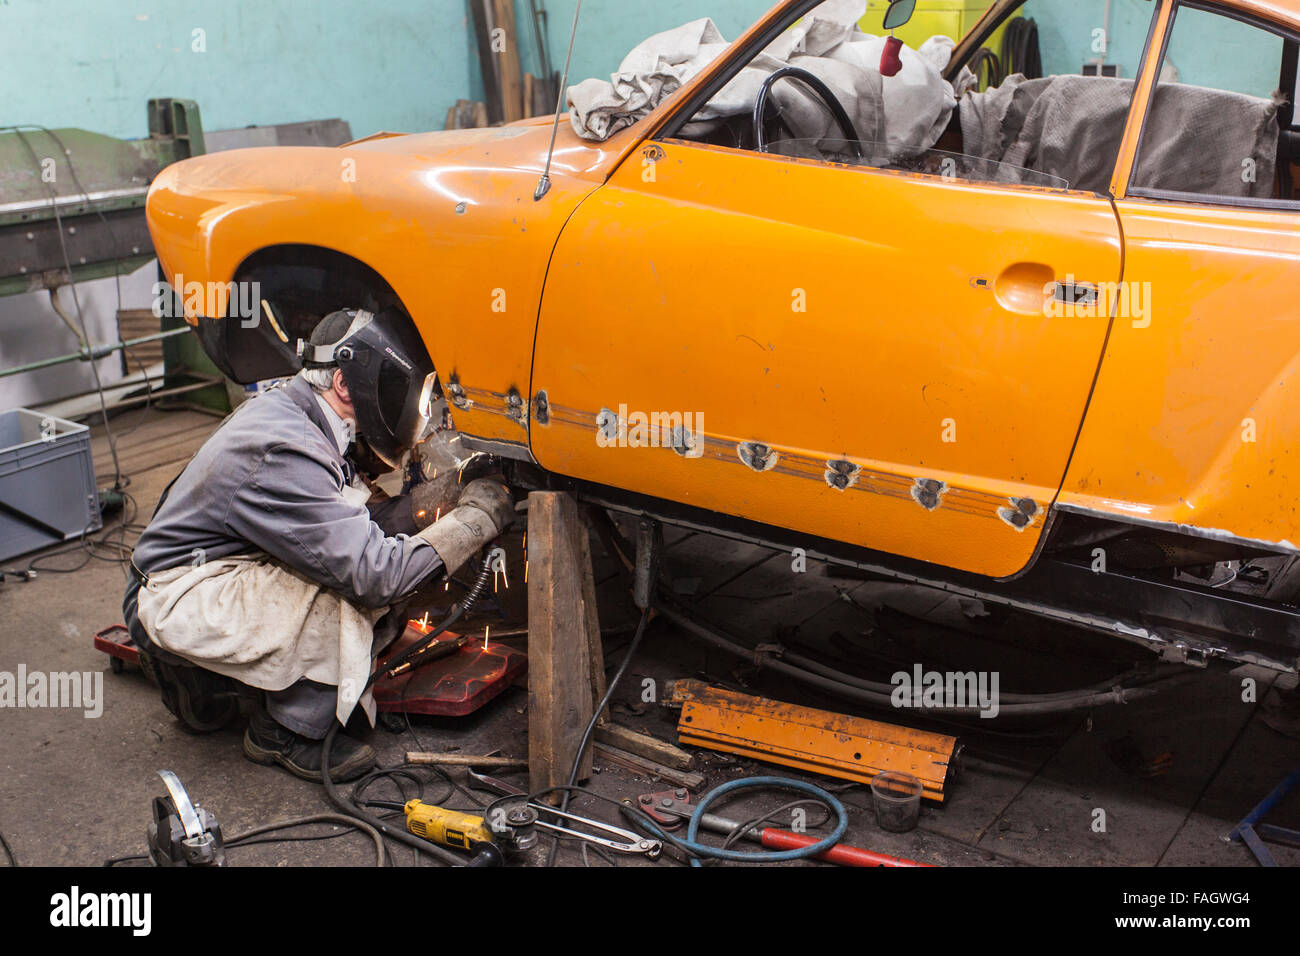 Coachbuilder restores an classic car VW Karmann Ghia. Welding work at the bodywork of the vehicle. Stock Photo